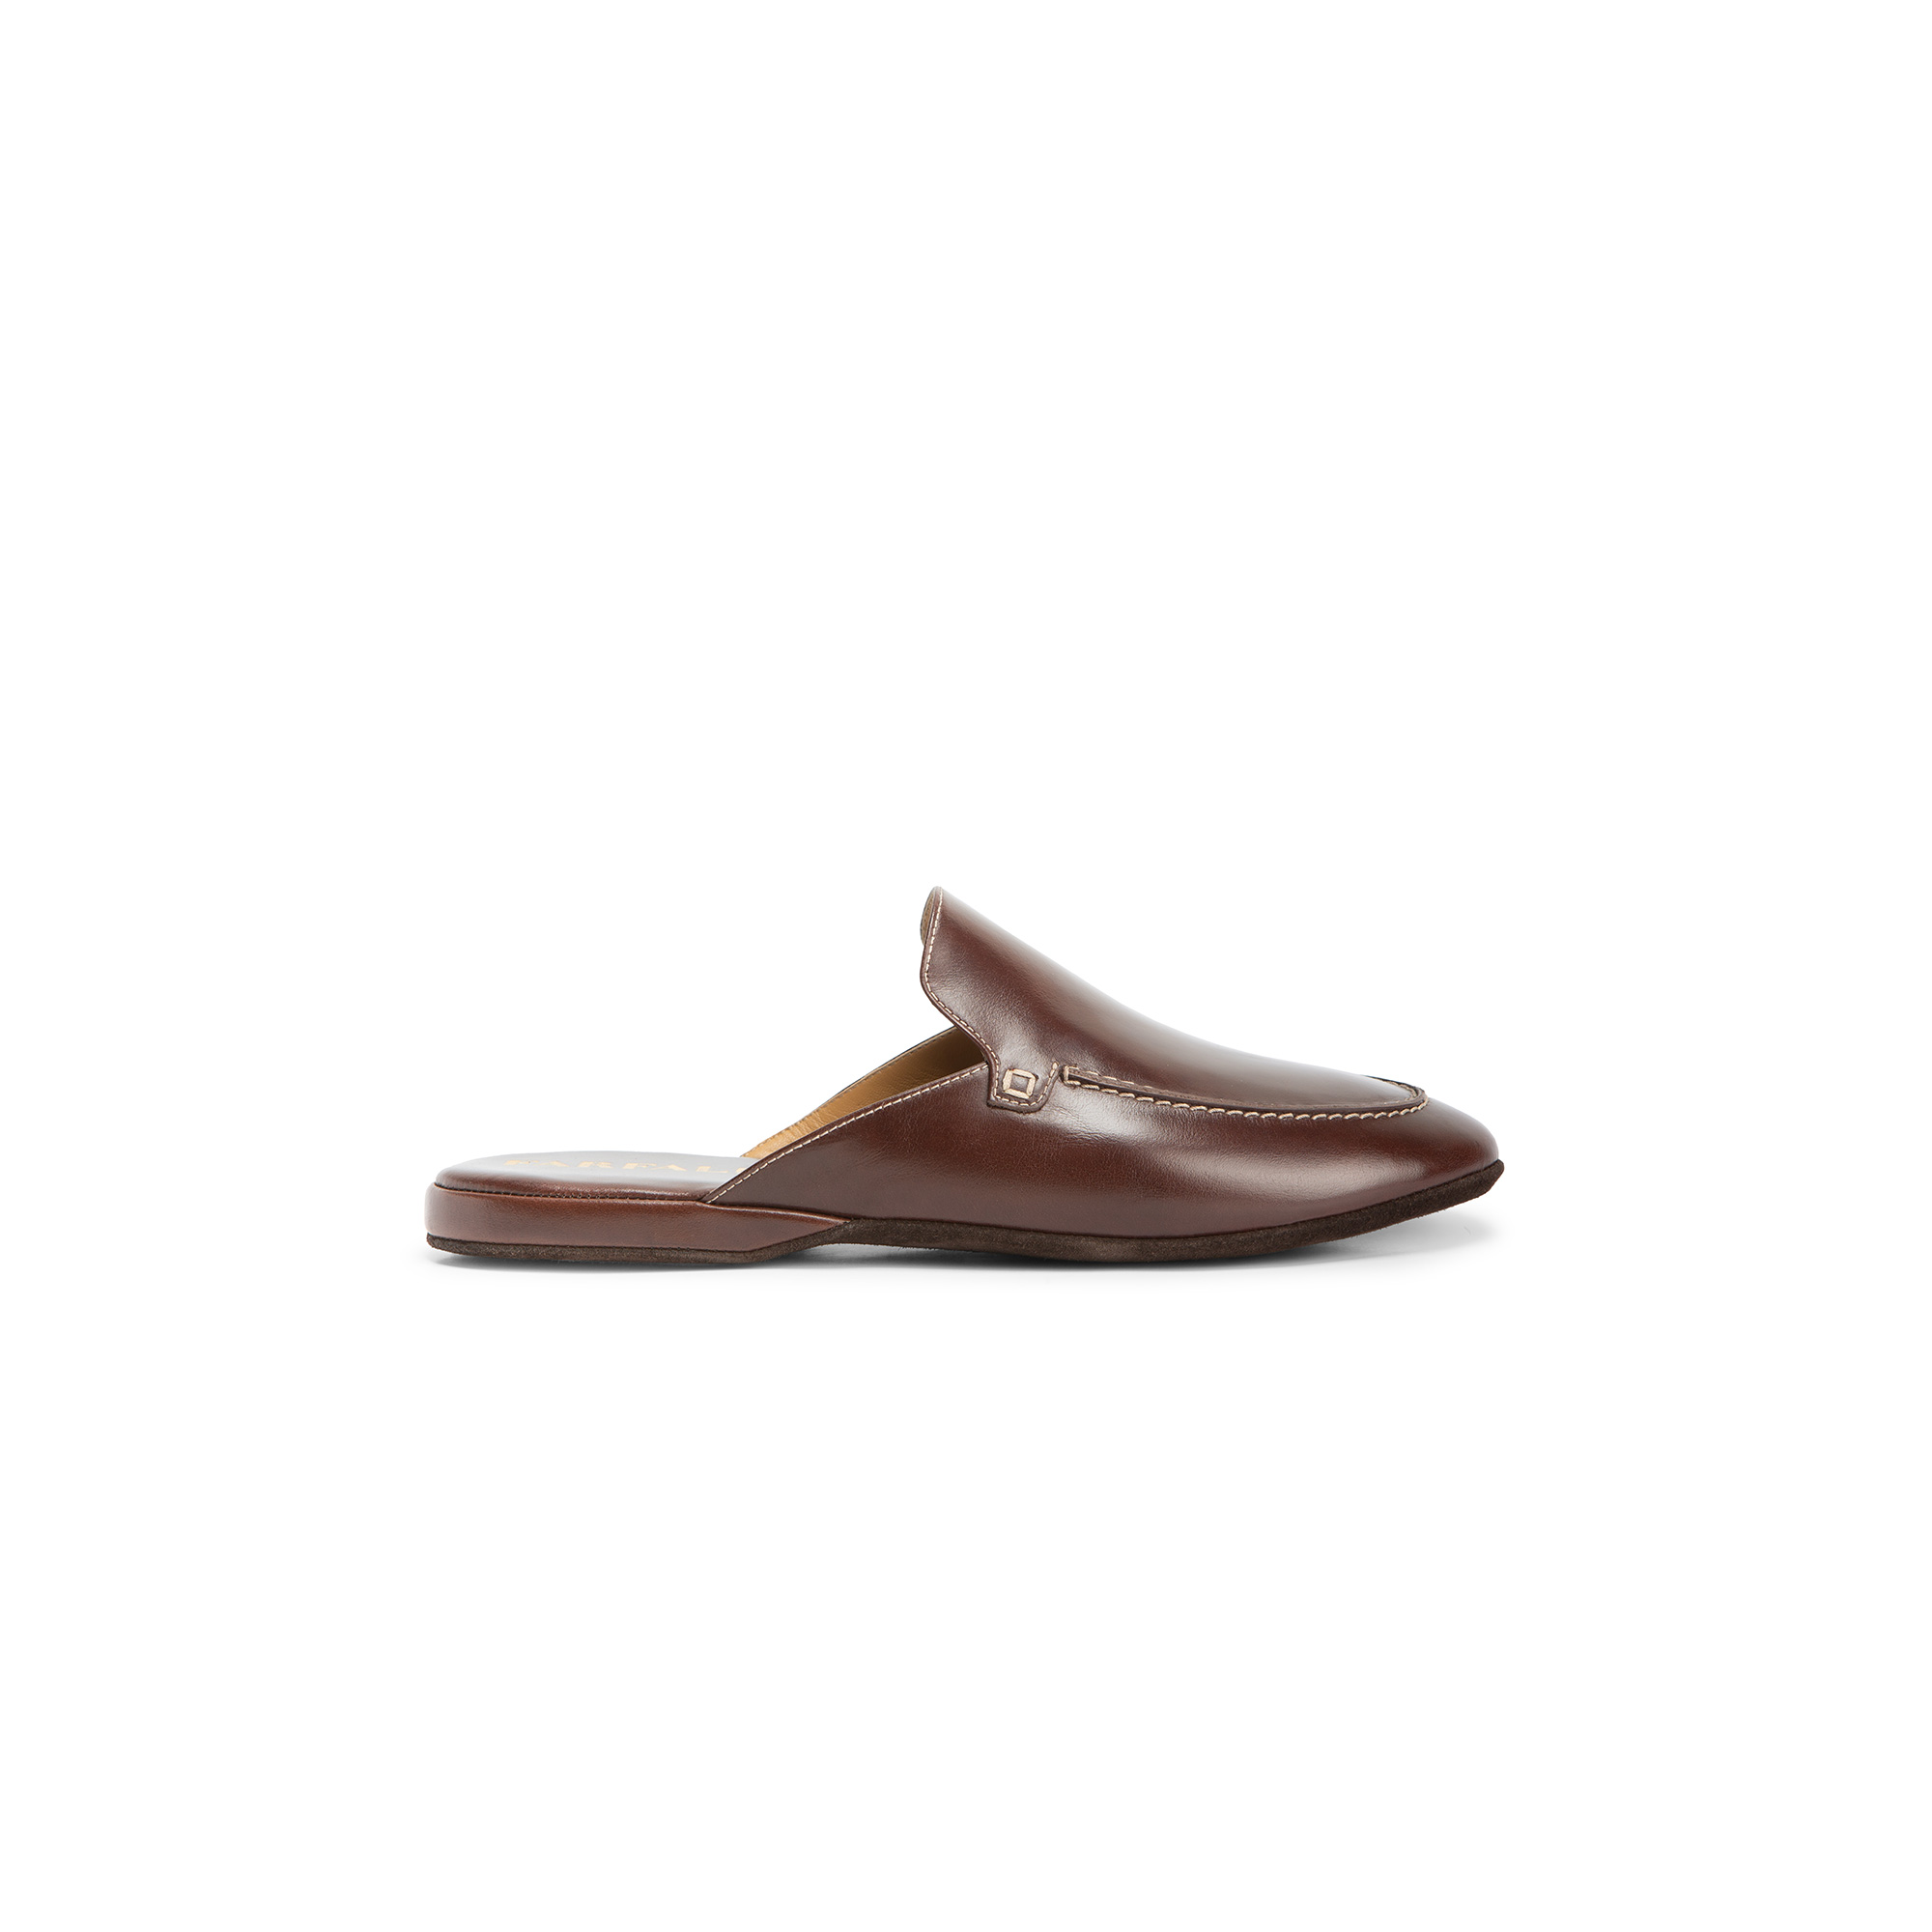 Classic indoor open dark brown calf leather slipper - Farfalla italian slippers